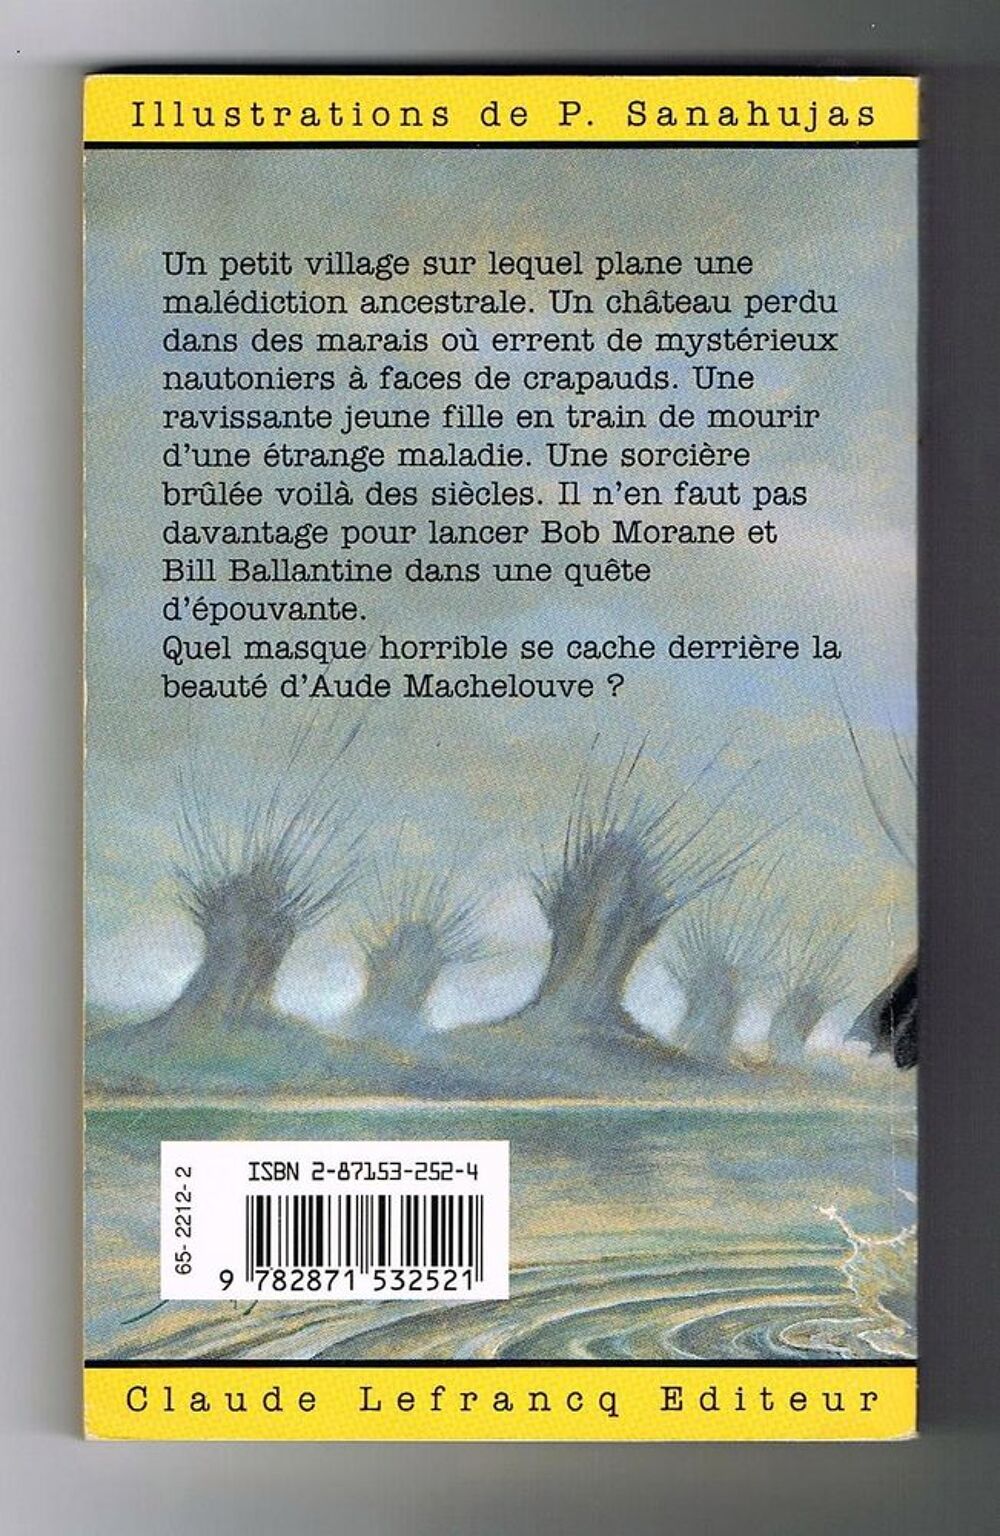 BOB MORANE - Henri VERNES -N&deg;30-L'EMPREINTE DU CRAPAUD-1995 Livres et BD